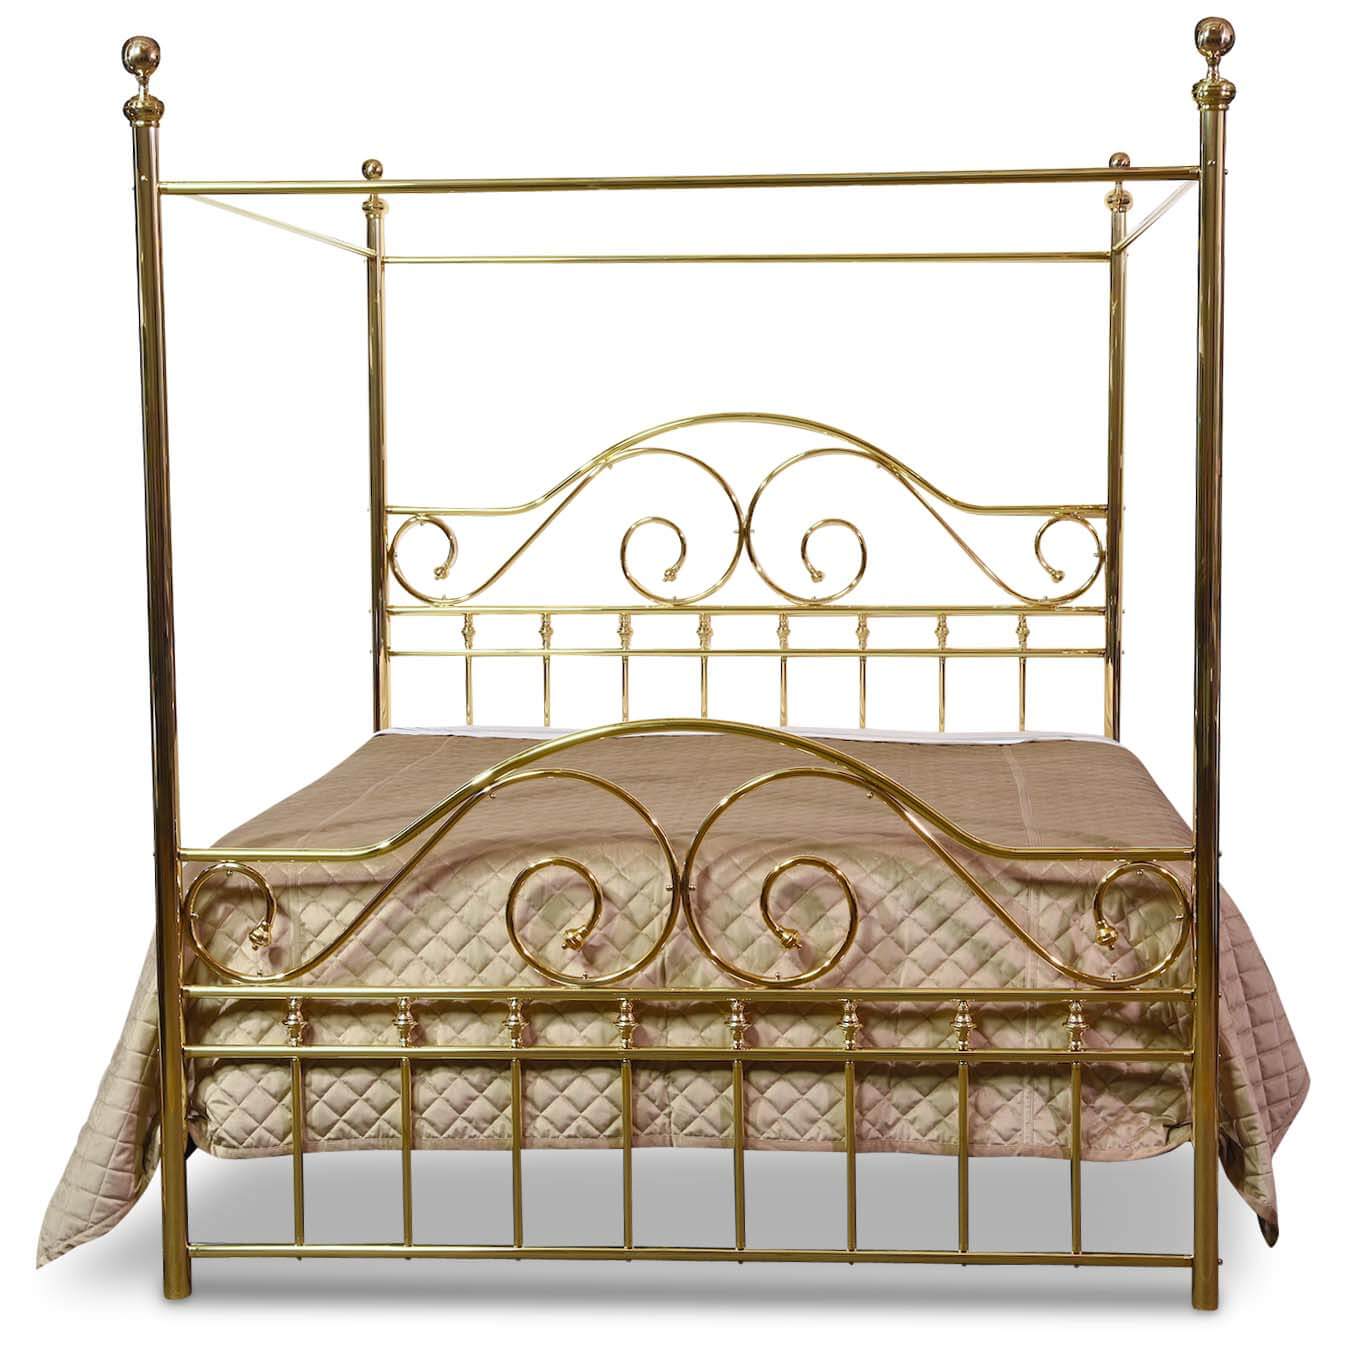 Swirls & Curls Bed, Brass Beds of Virginia